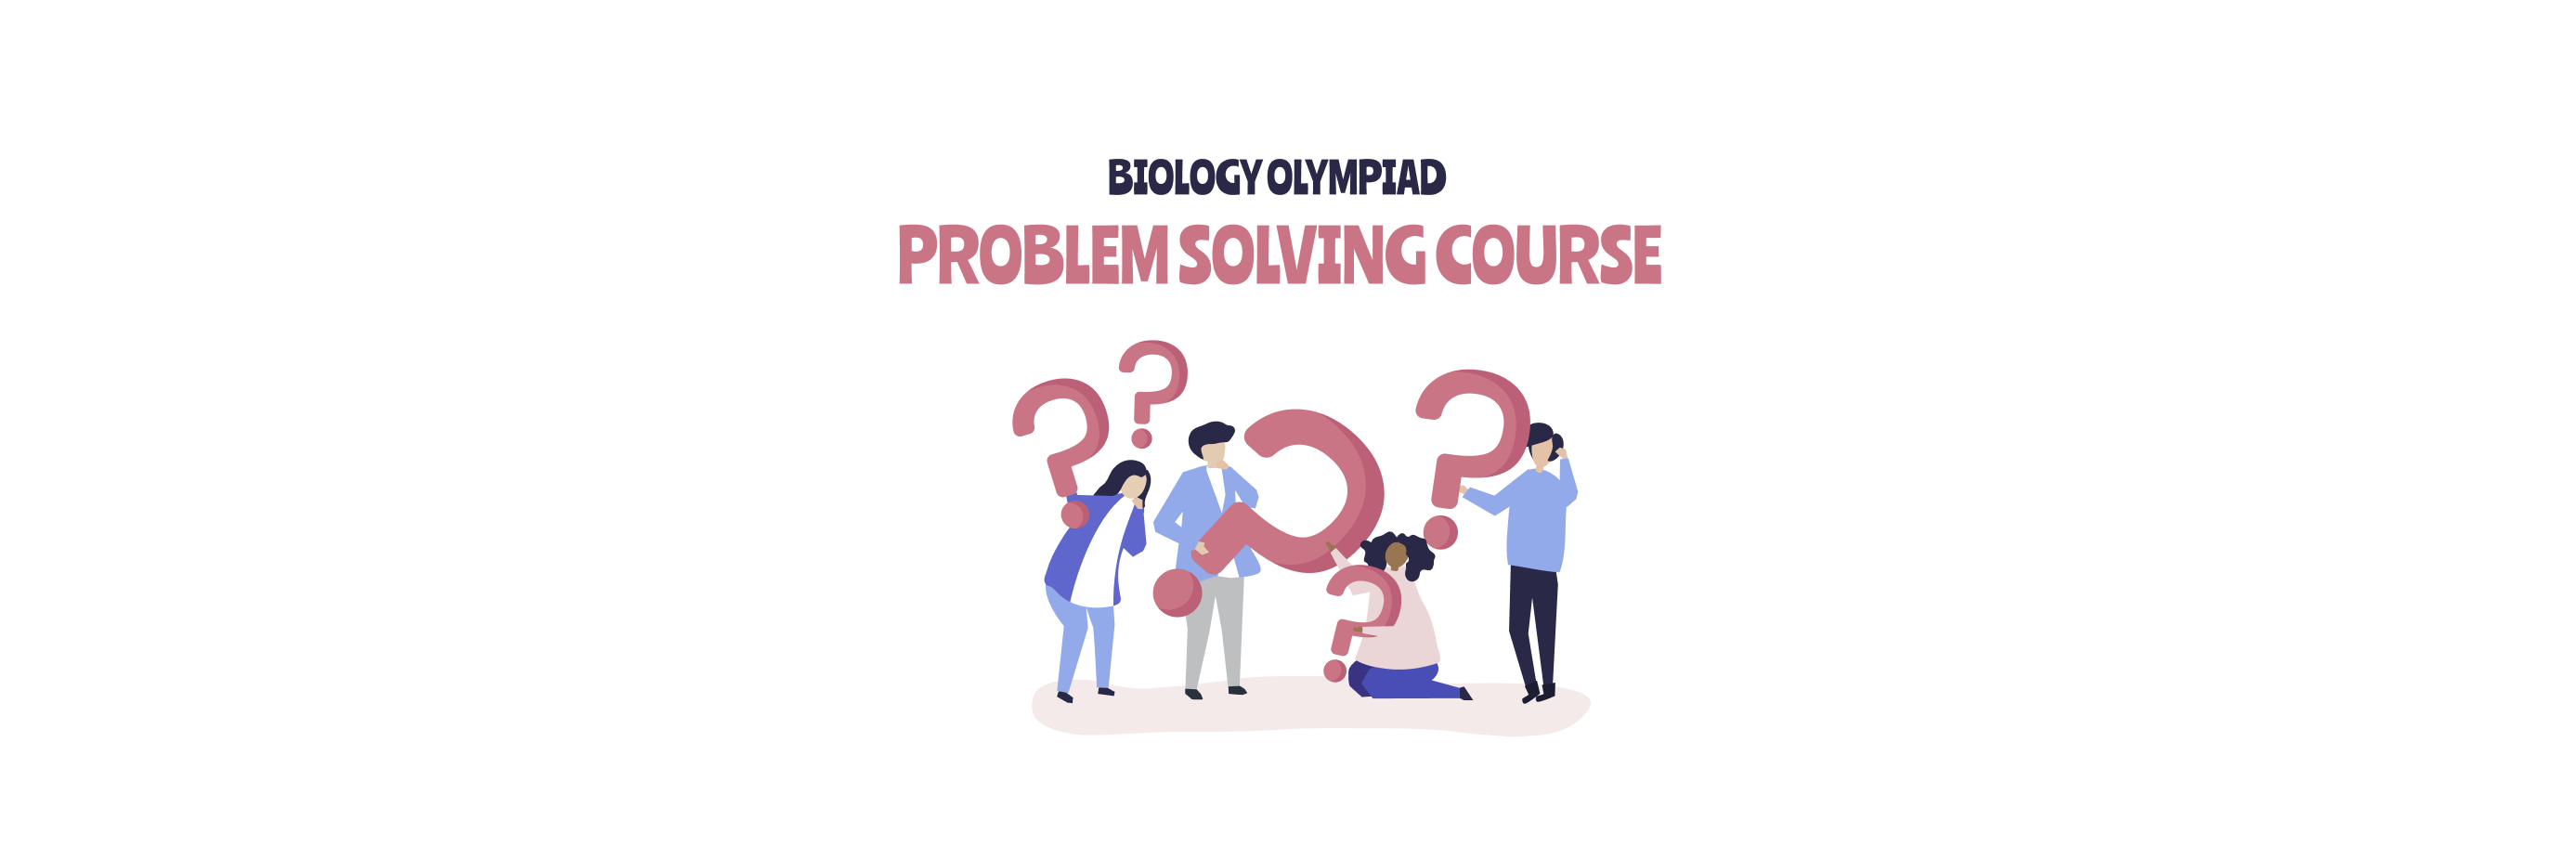 art of problem solving biology olympiad